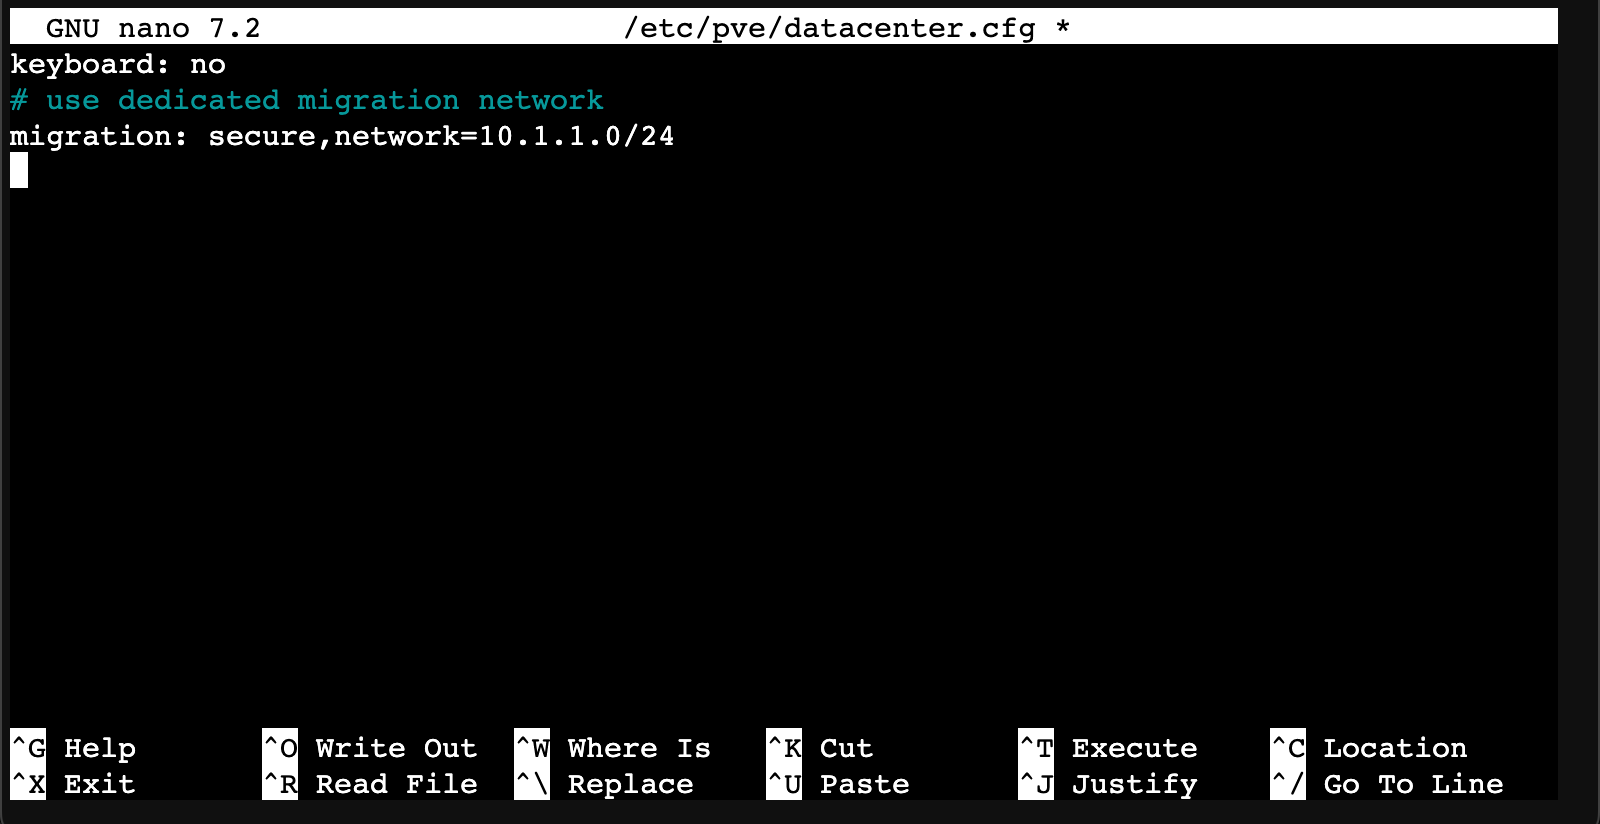 Configure migration settings in datacenter.cfg